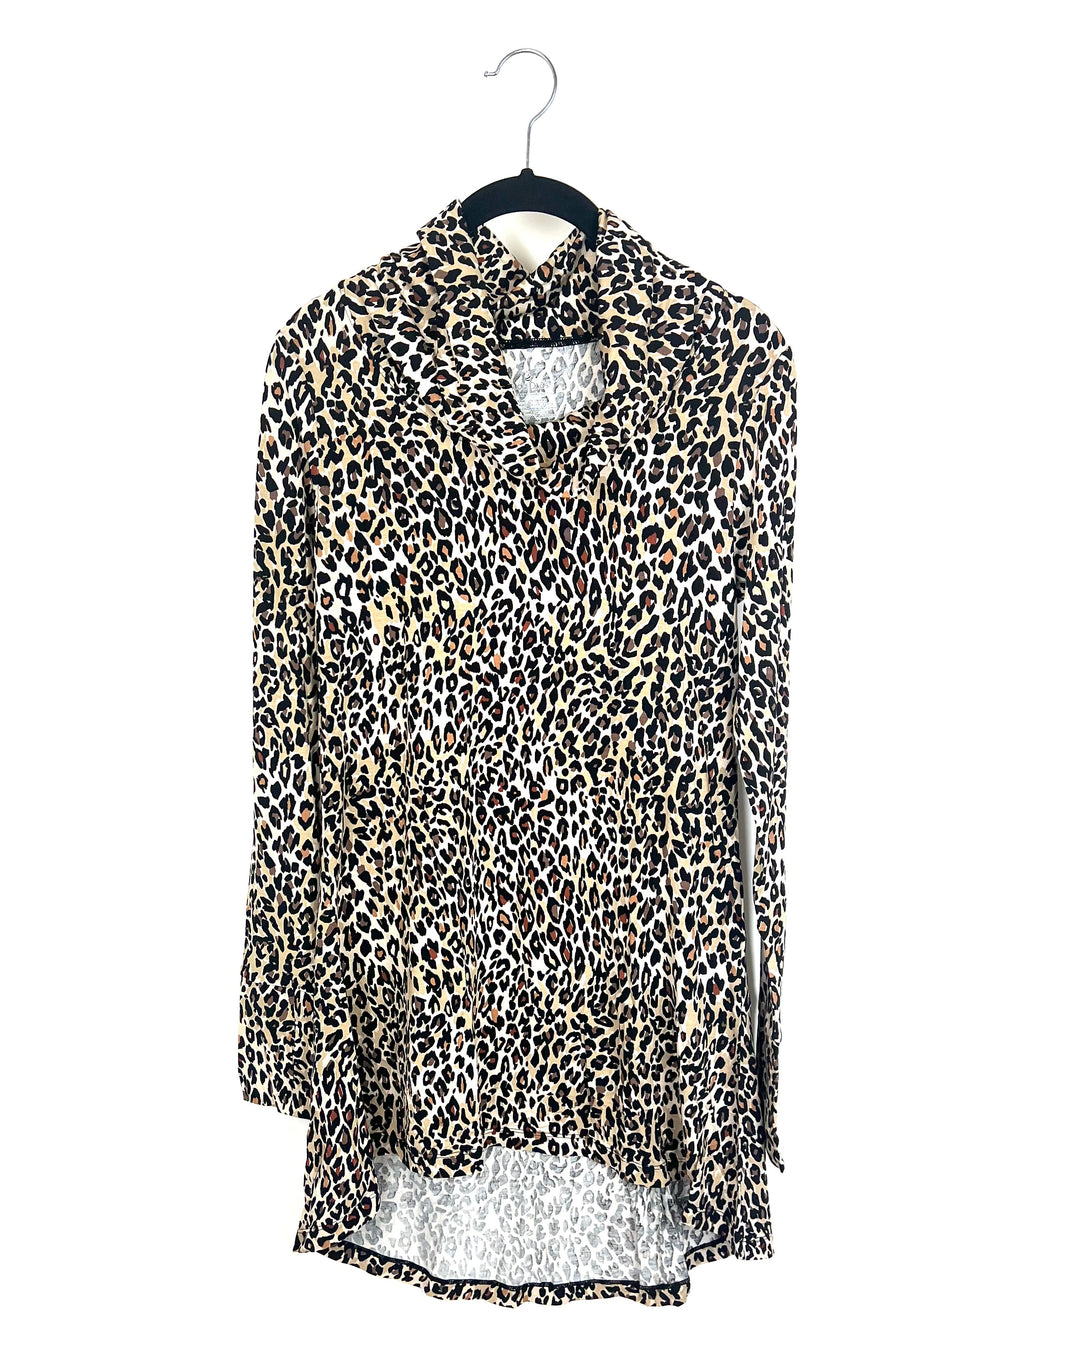 Leopard Print Tunic - Size 6-8